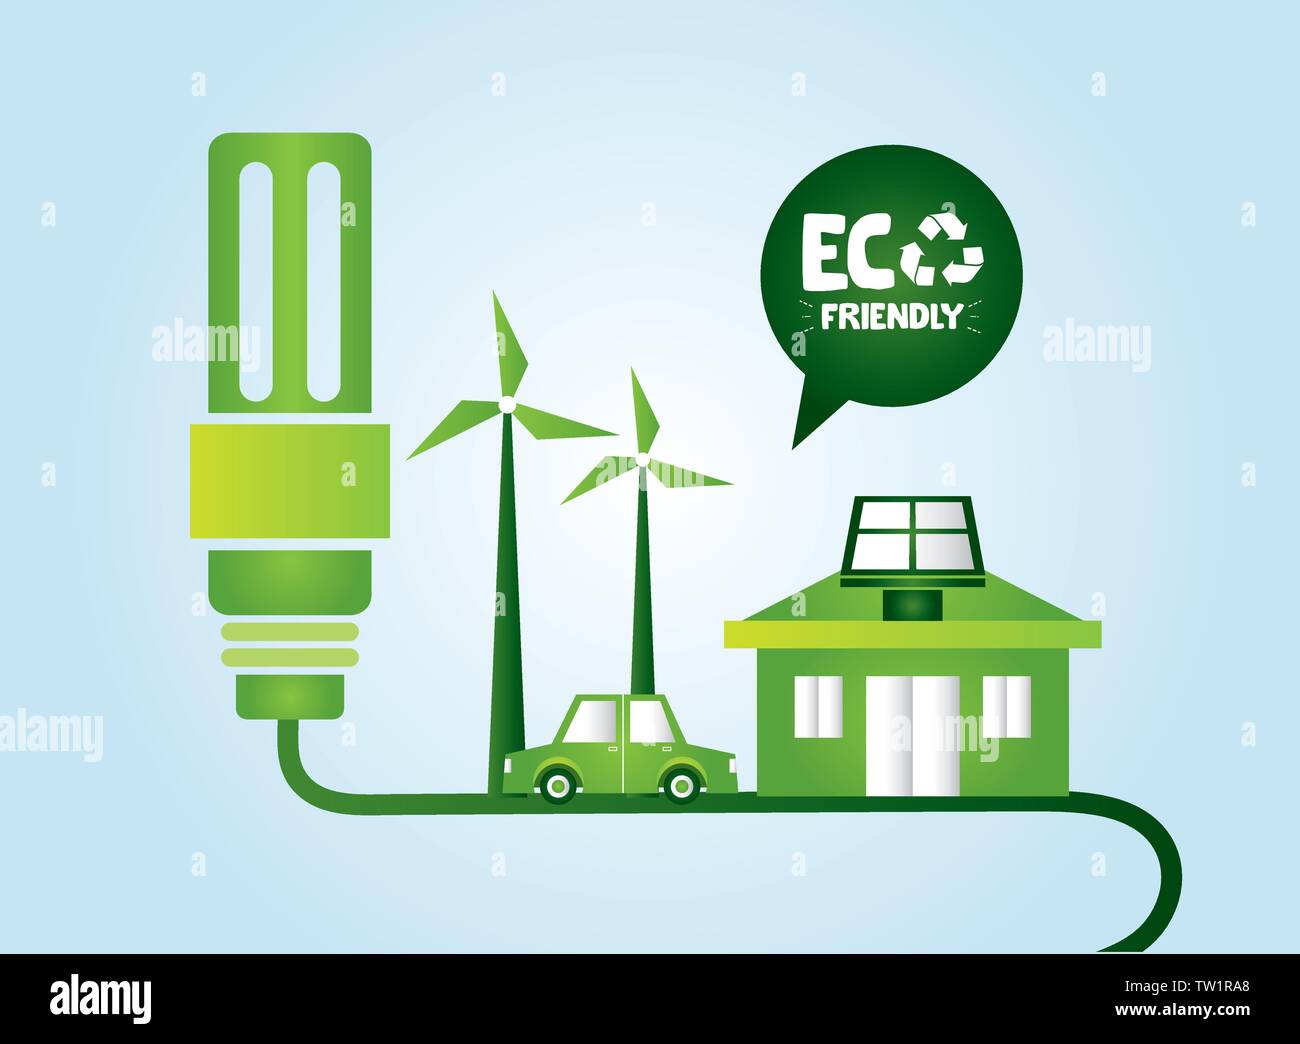 eco friendly planet design image Stock Vector